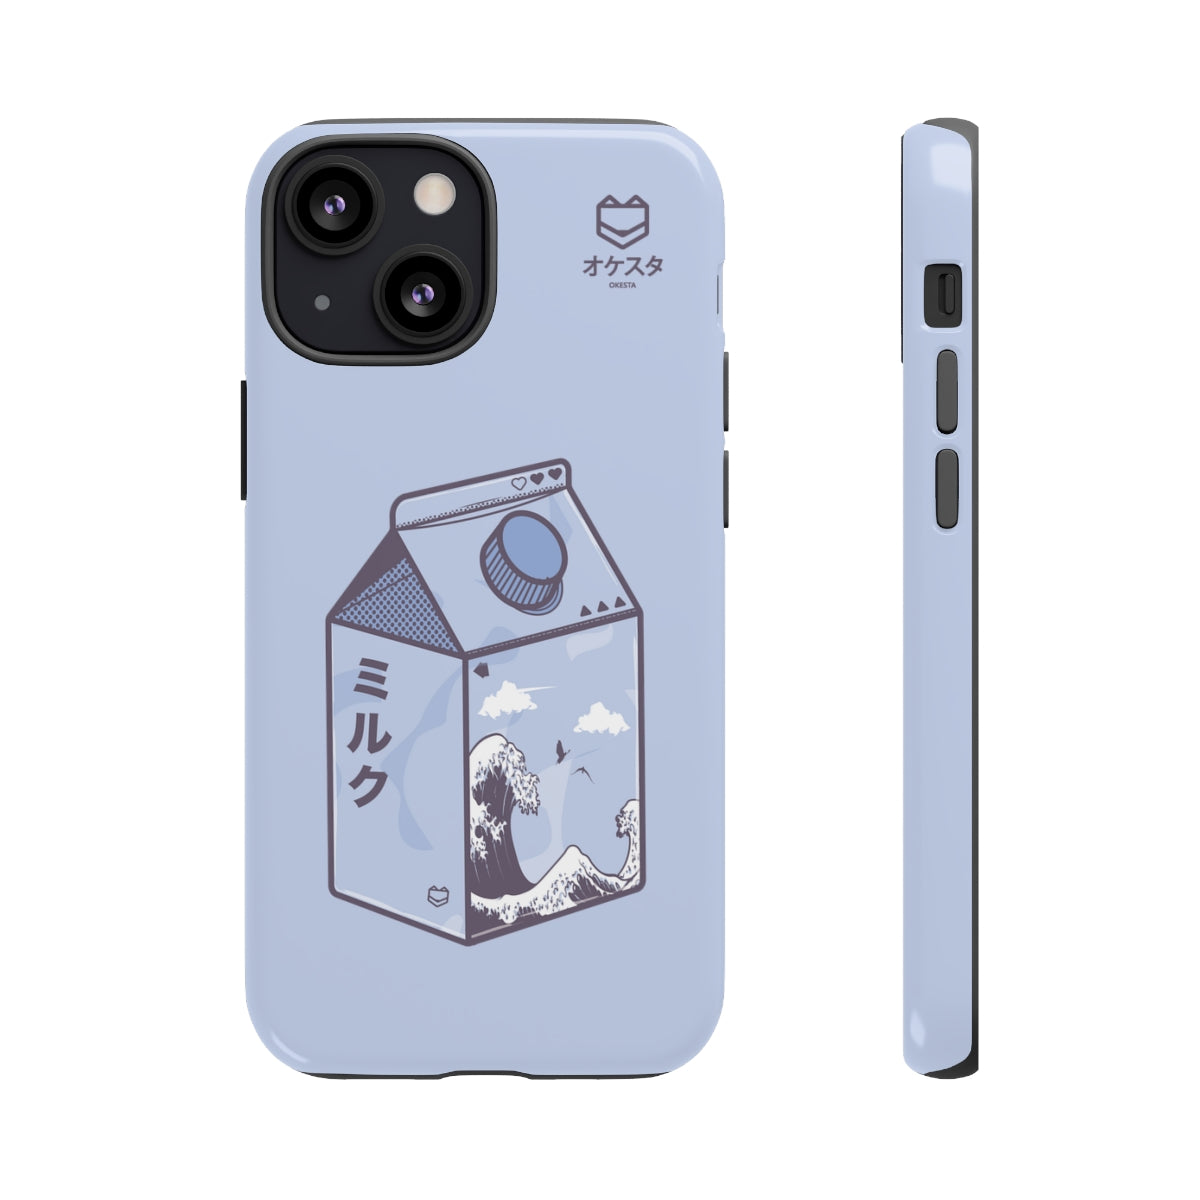 Kanagawa Carton iPhone Case